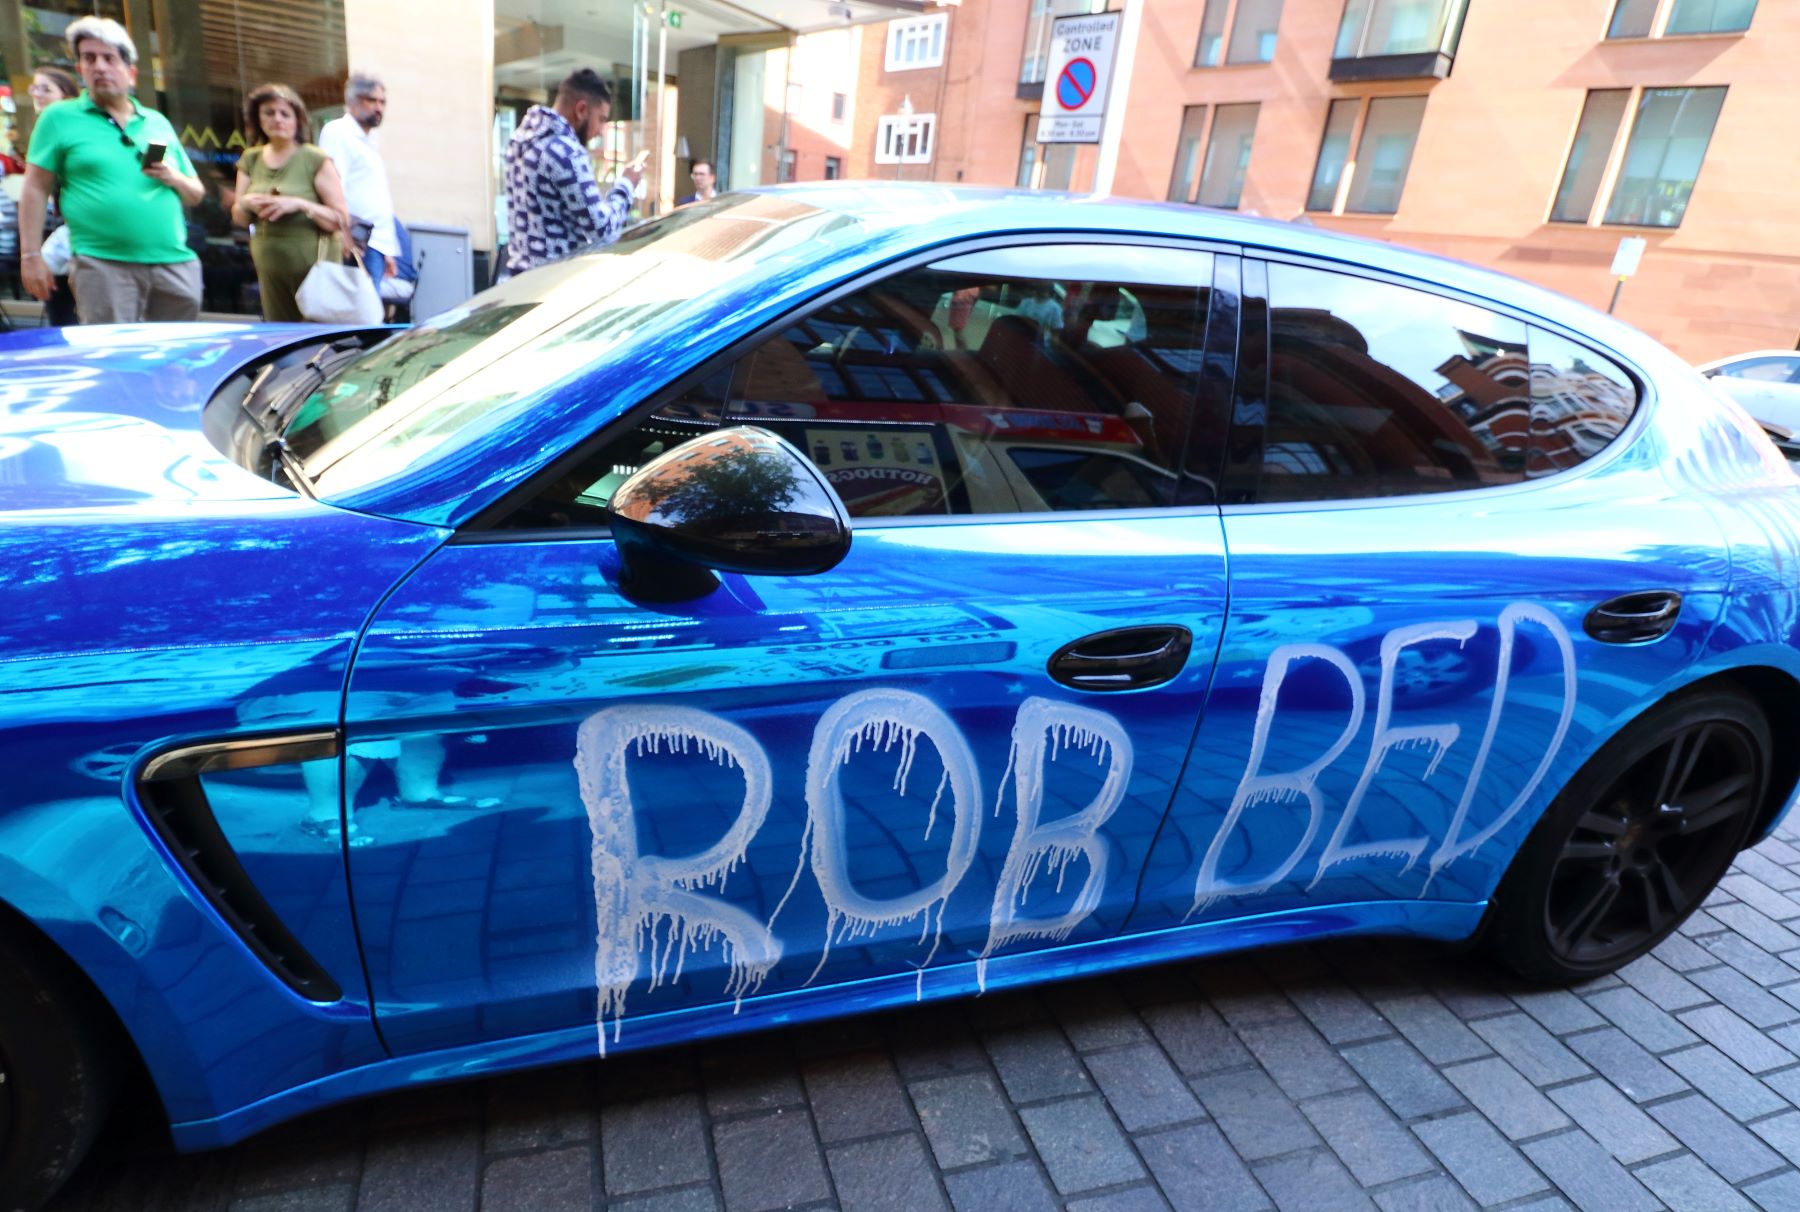 Vandalism spray paint on a blue Porsche supercar model in London, U.K.